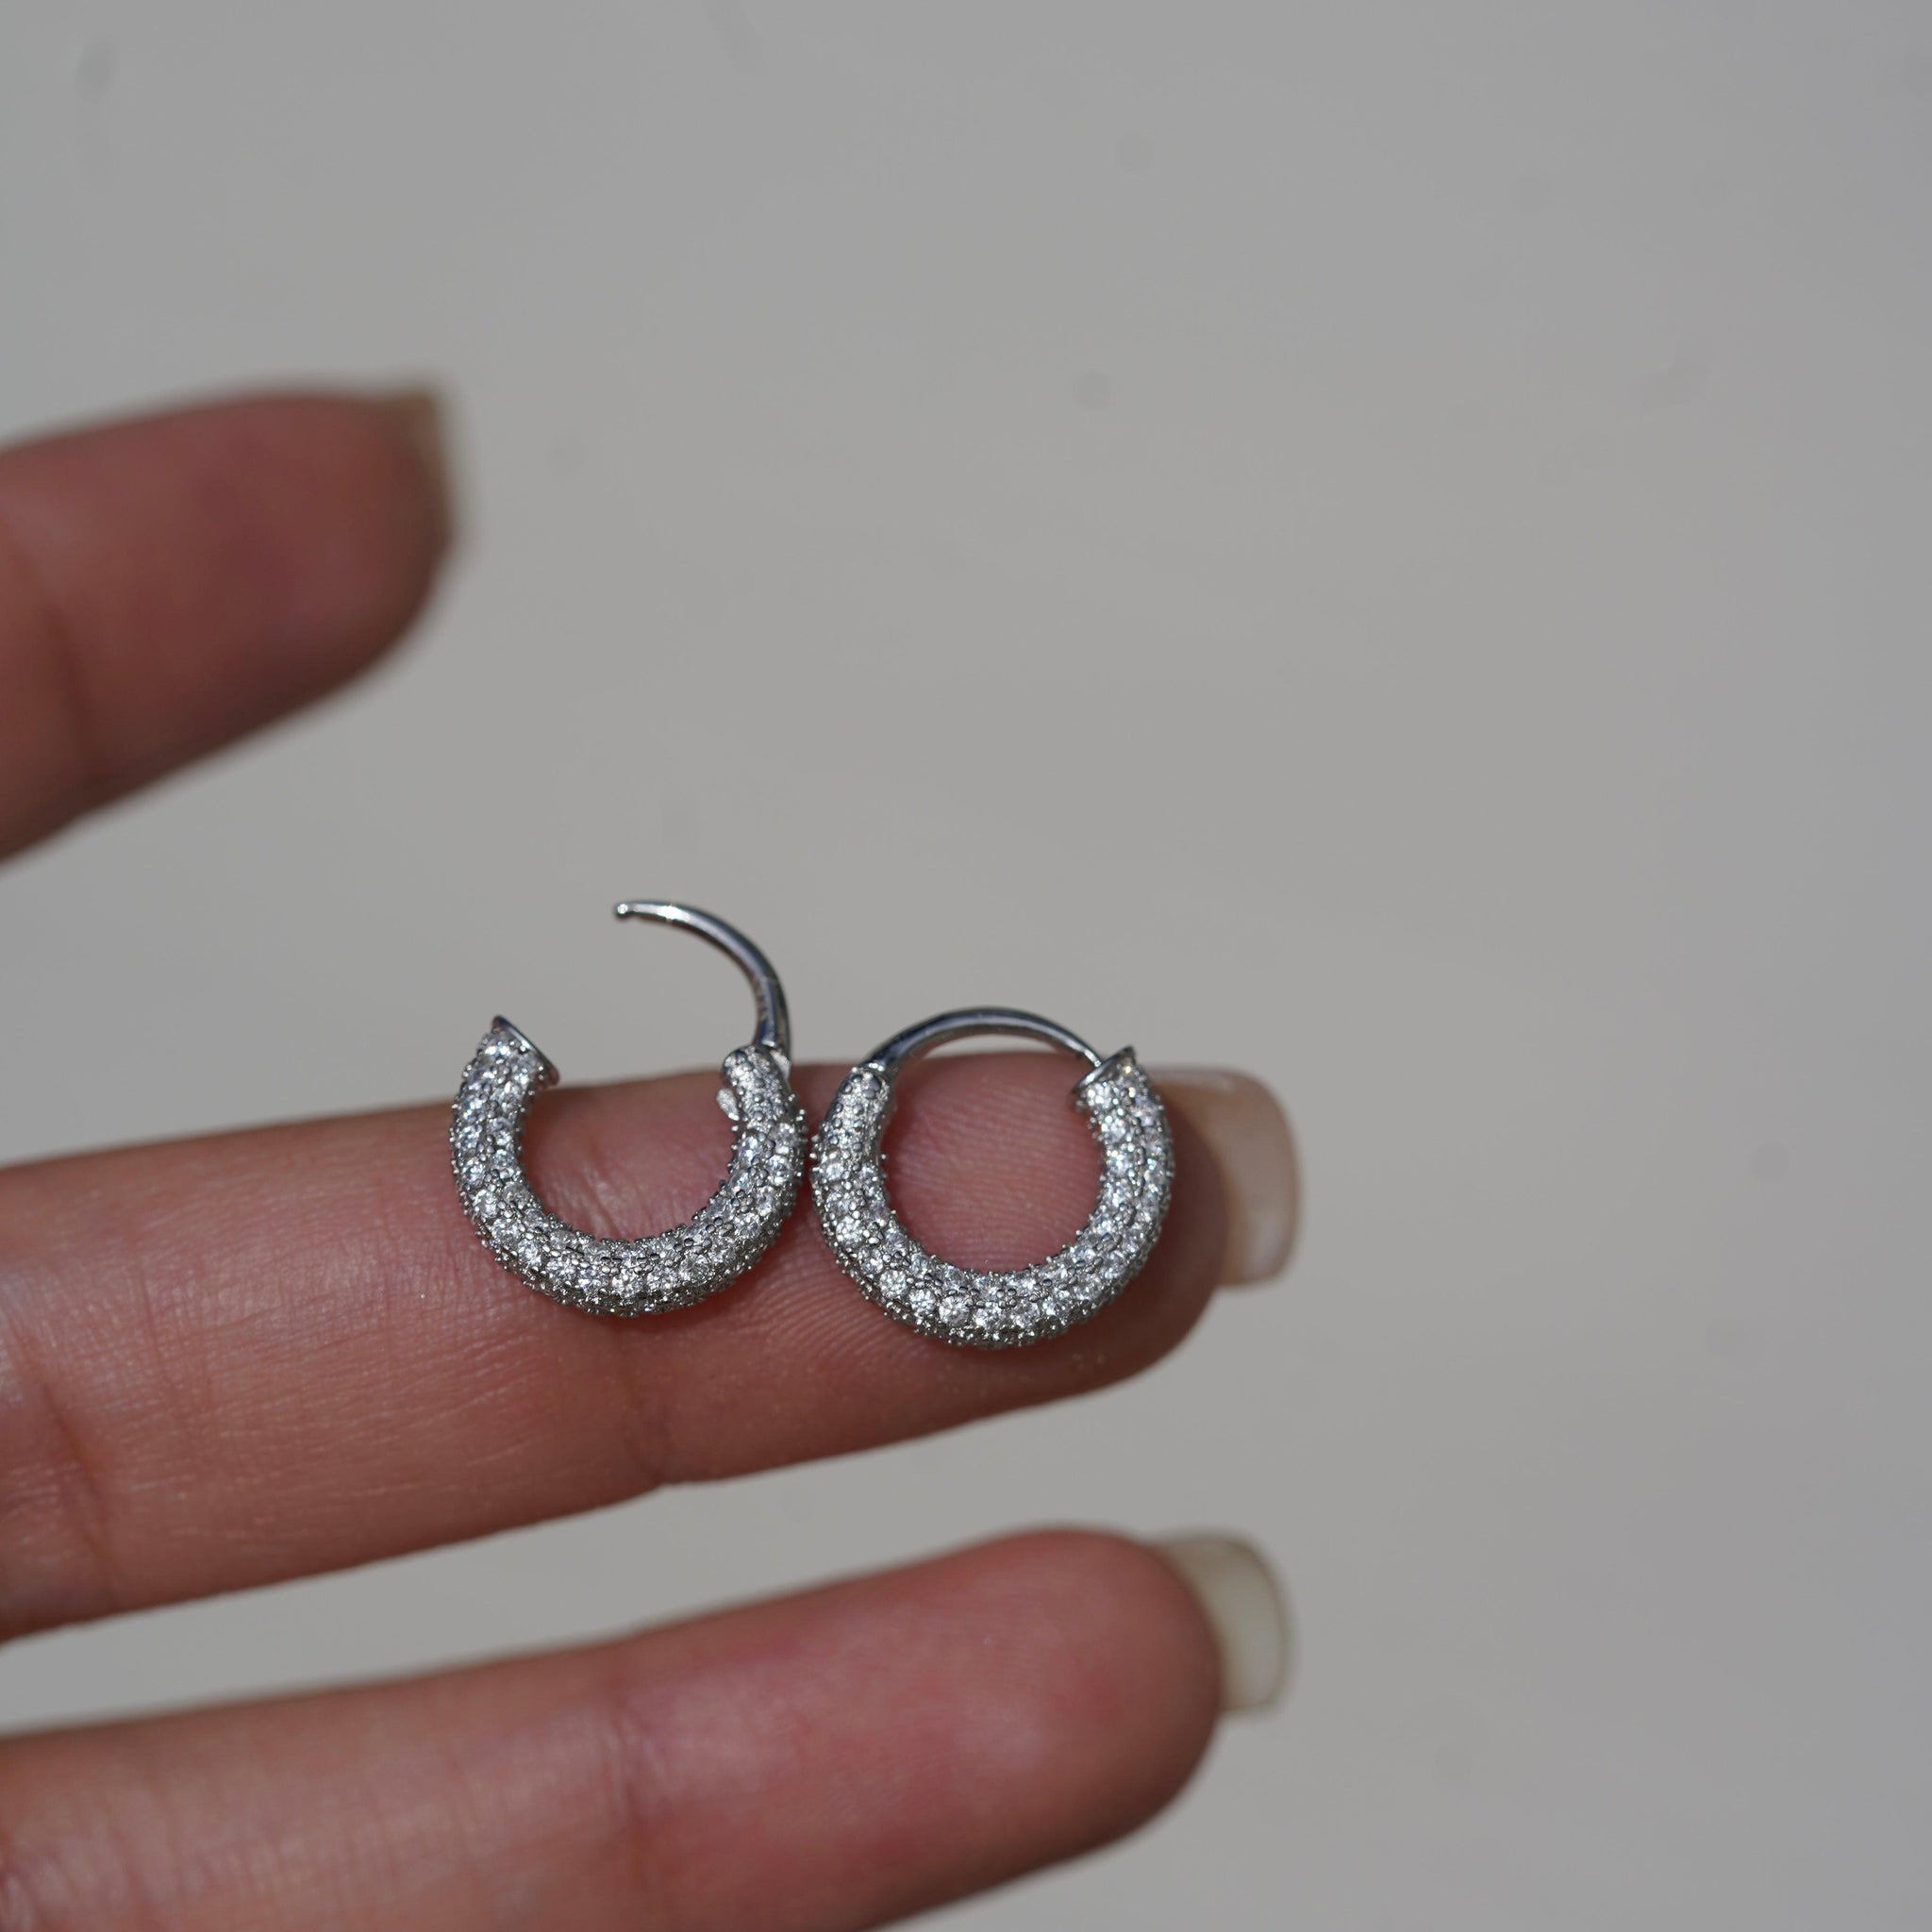 Mini Sparkle Sterling Silver Hoop Earrings